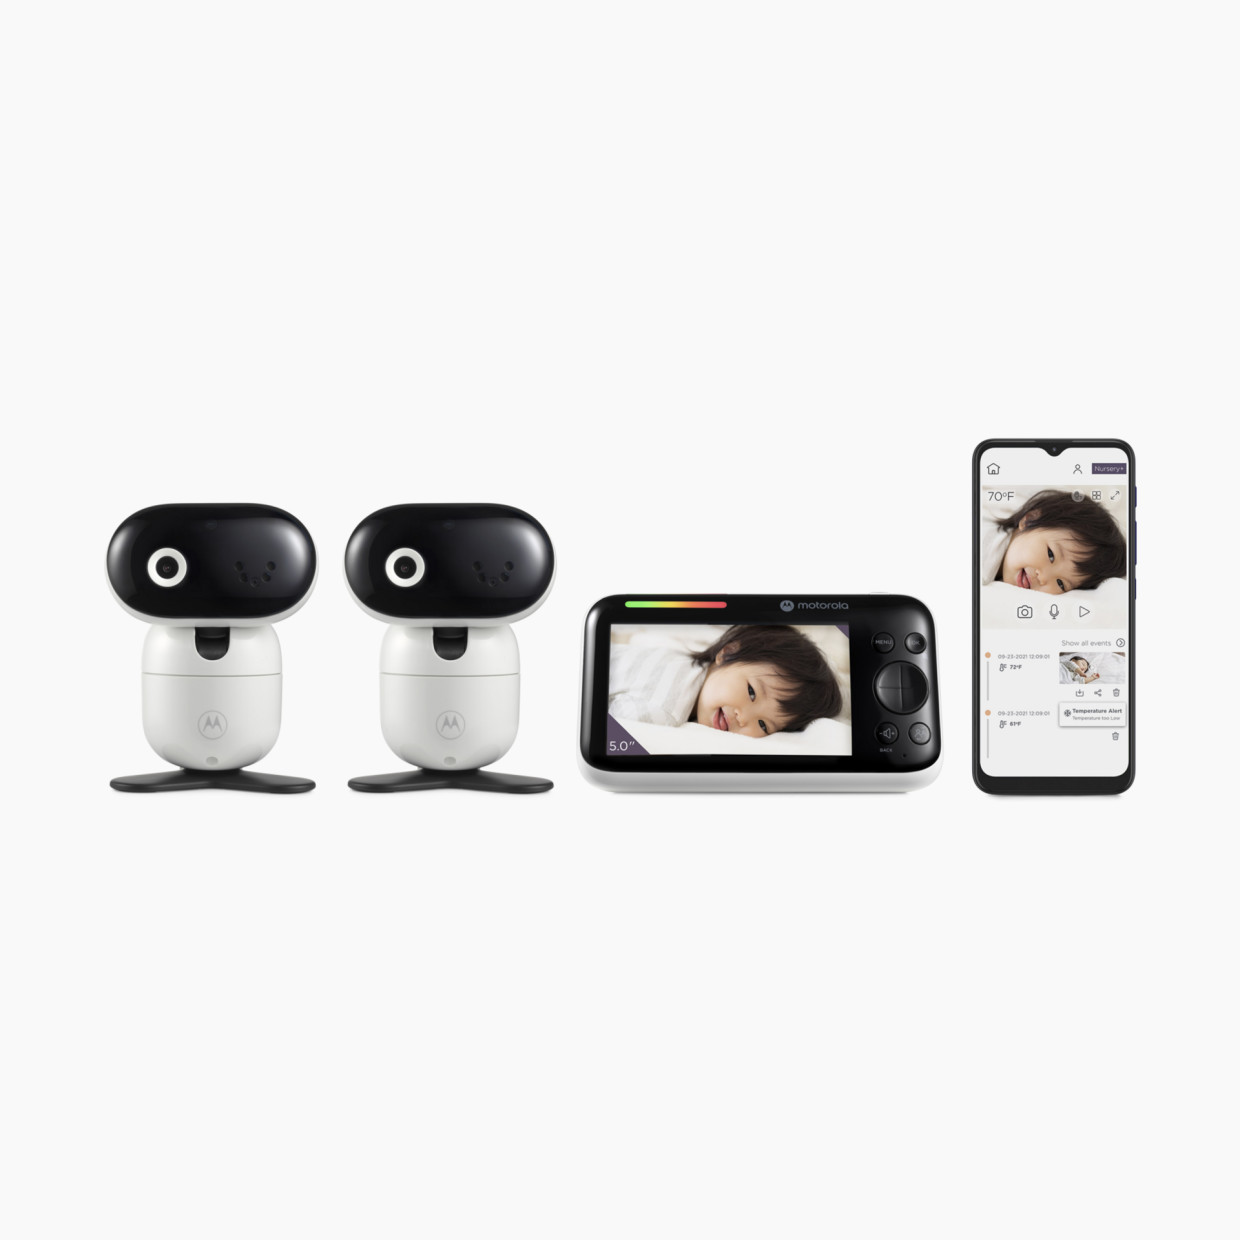 Babysense See 1080p HD WiFi Baby Monitor Camera with Pan, Tilt